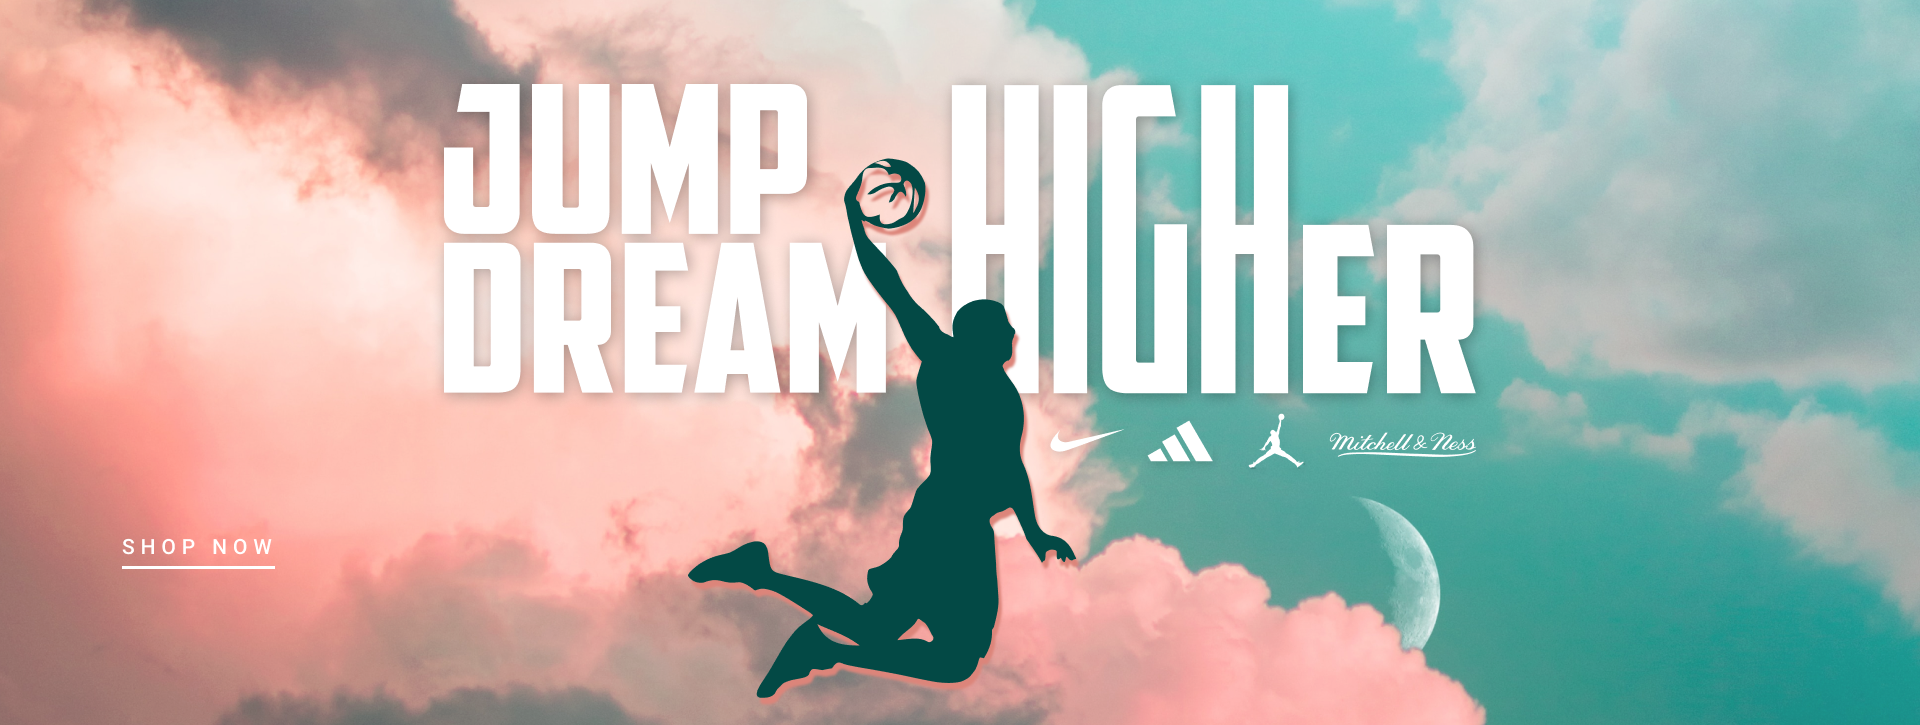 Jump High Dream Higher